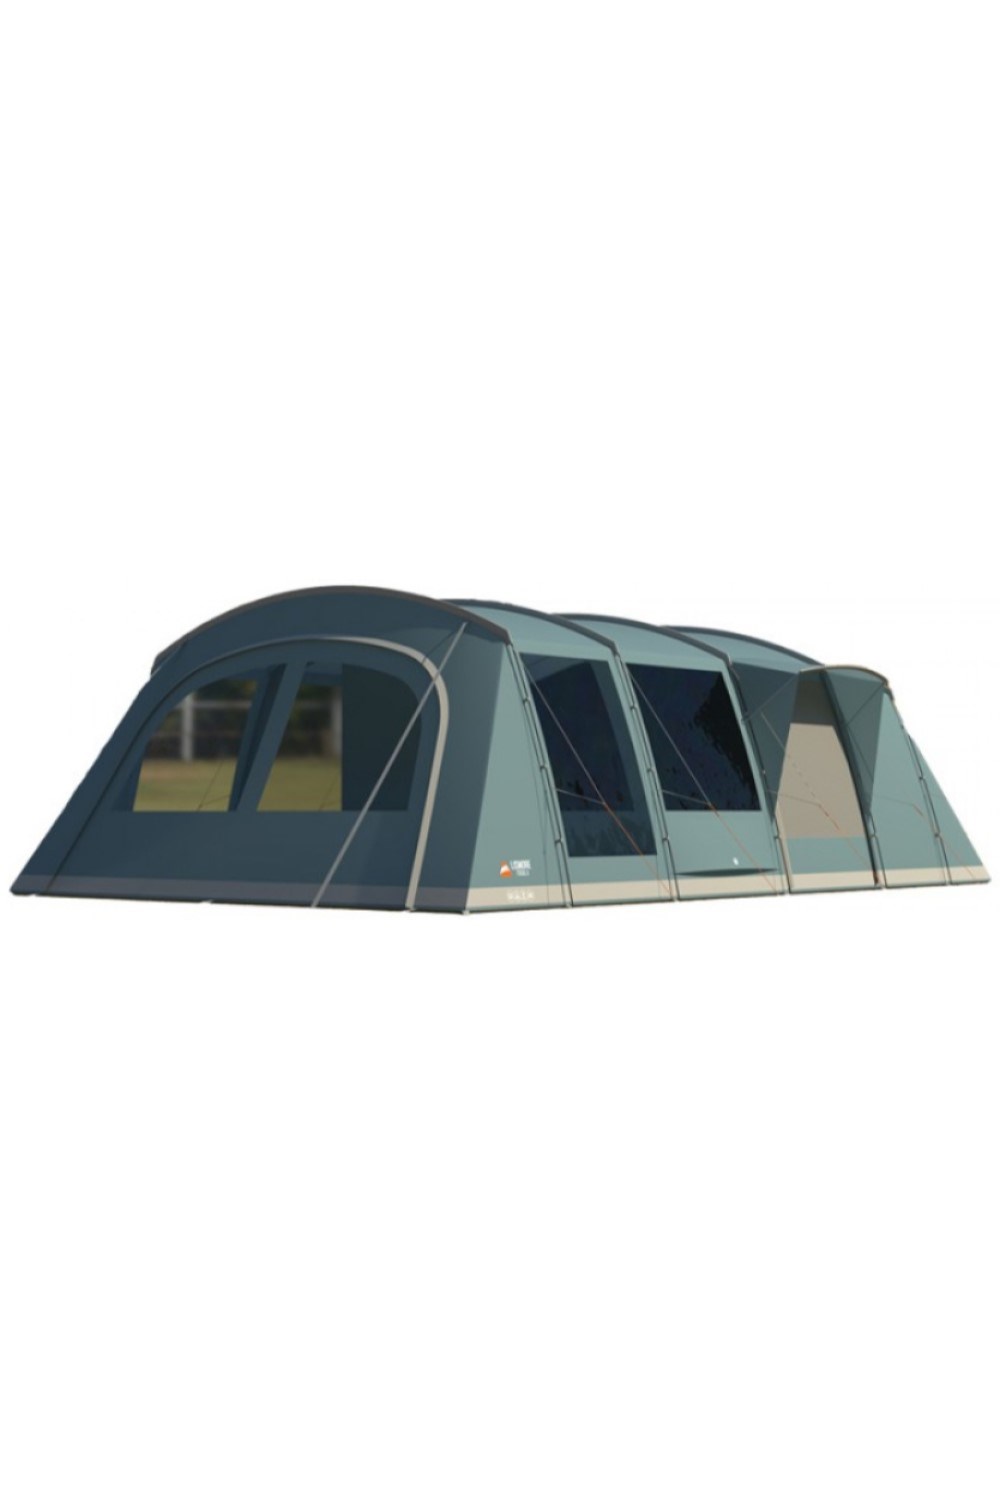 Lismore 700dlx 7 Man Tent -